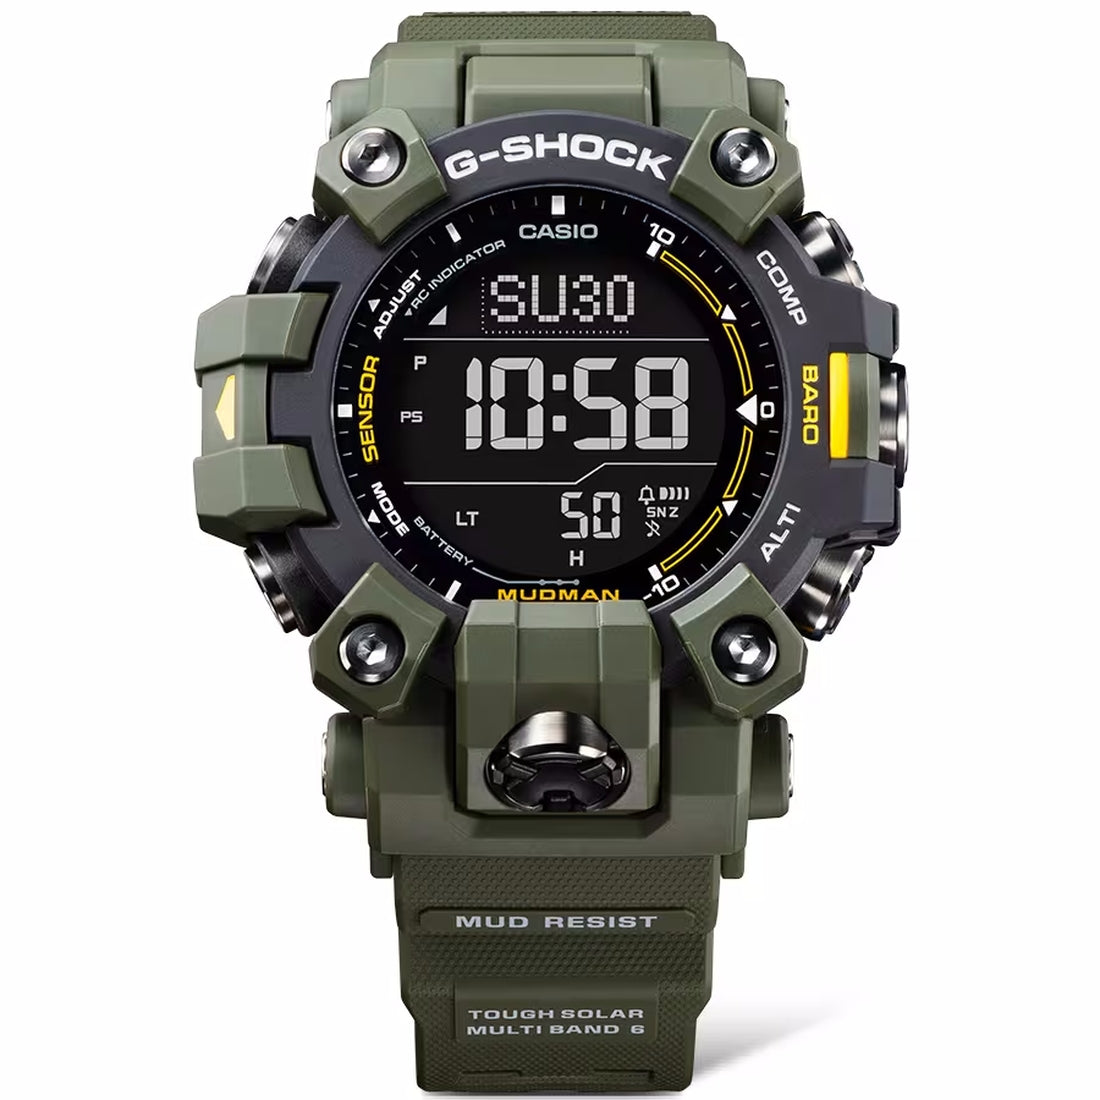 Orologio G-Shock GW-9500-3ER Mudman verde militare